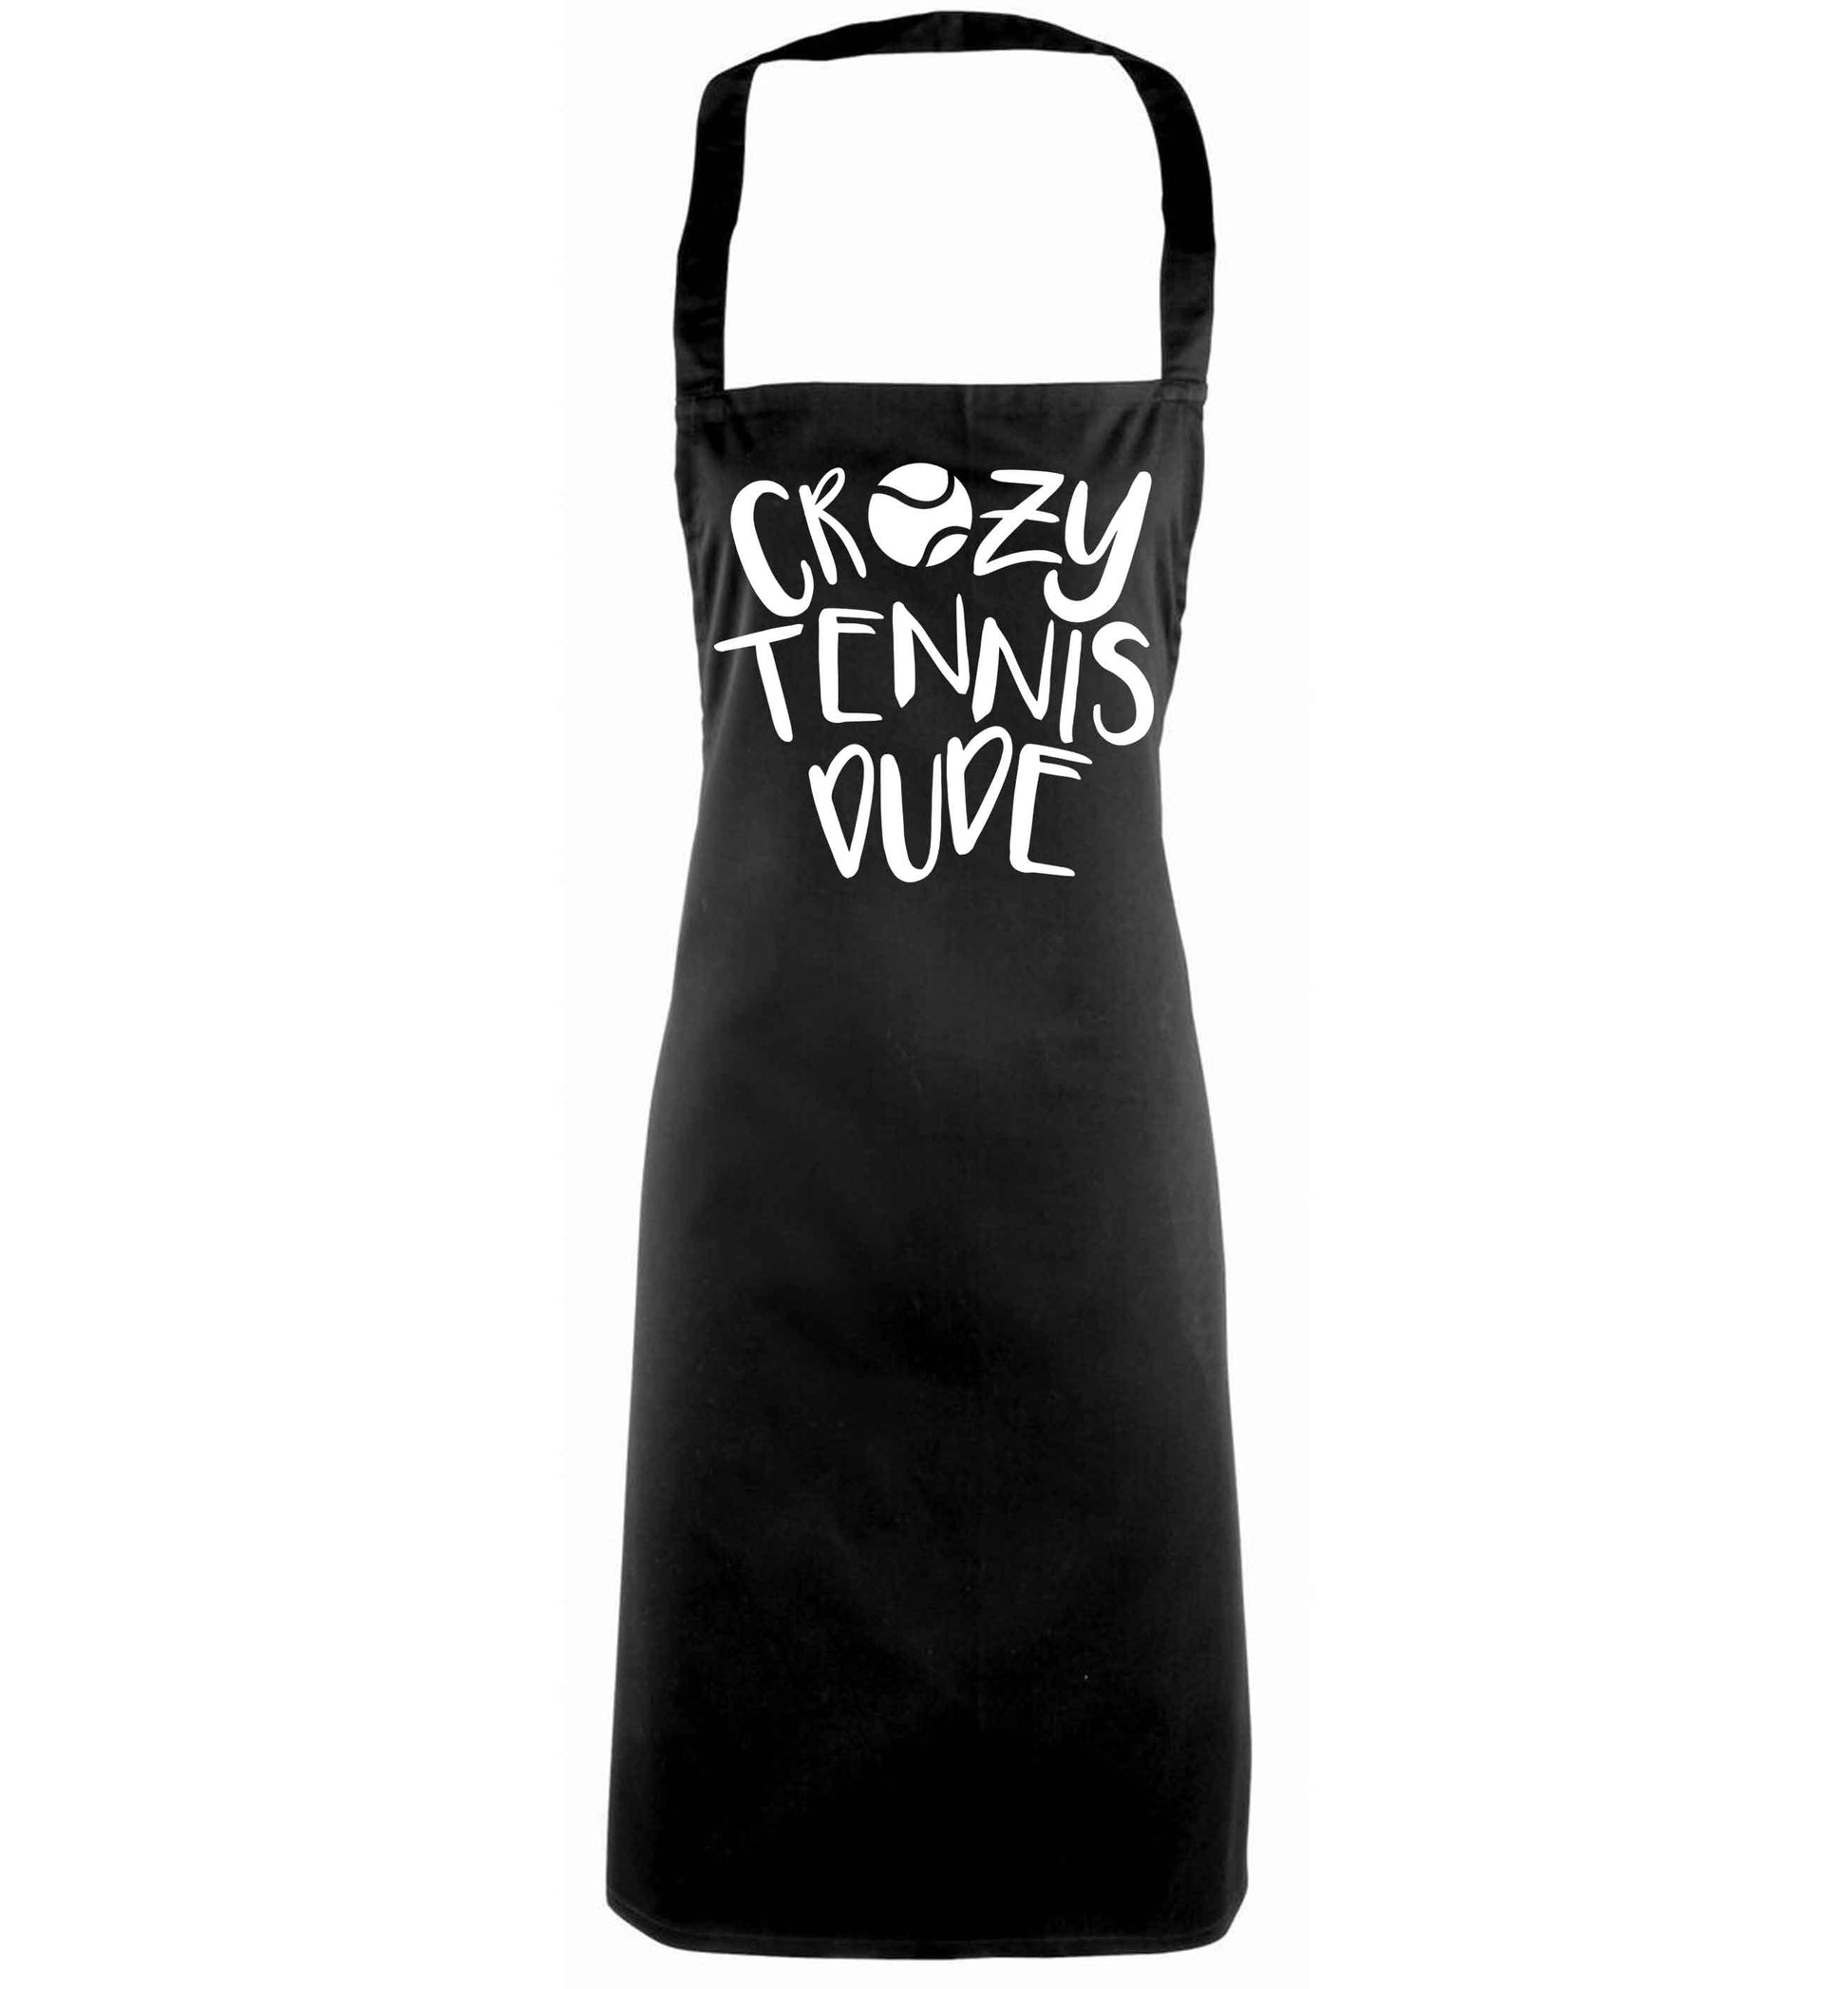 Crazy tennis dude black apron